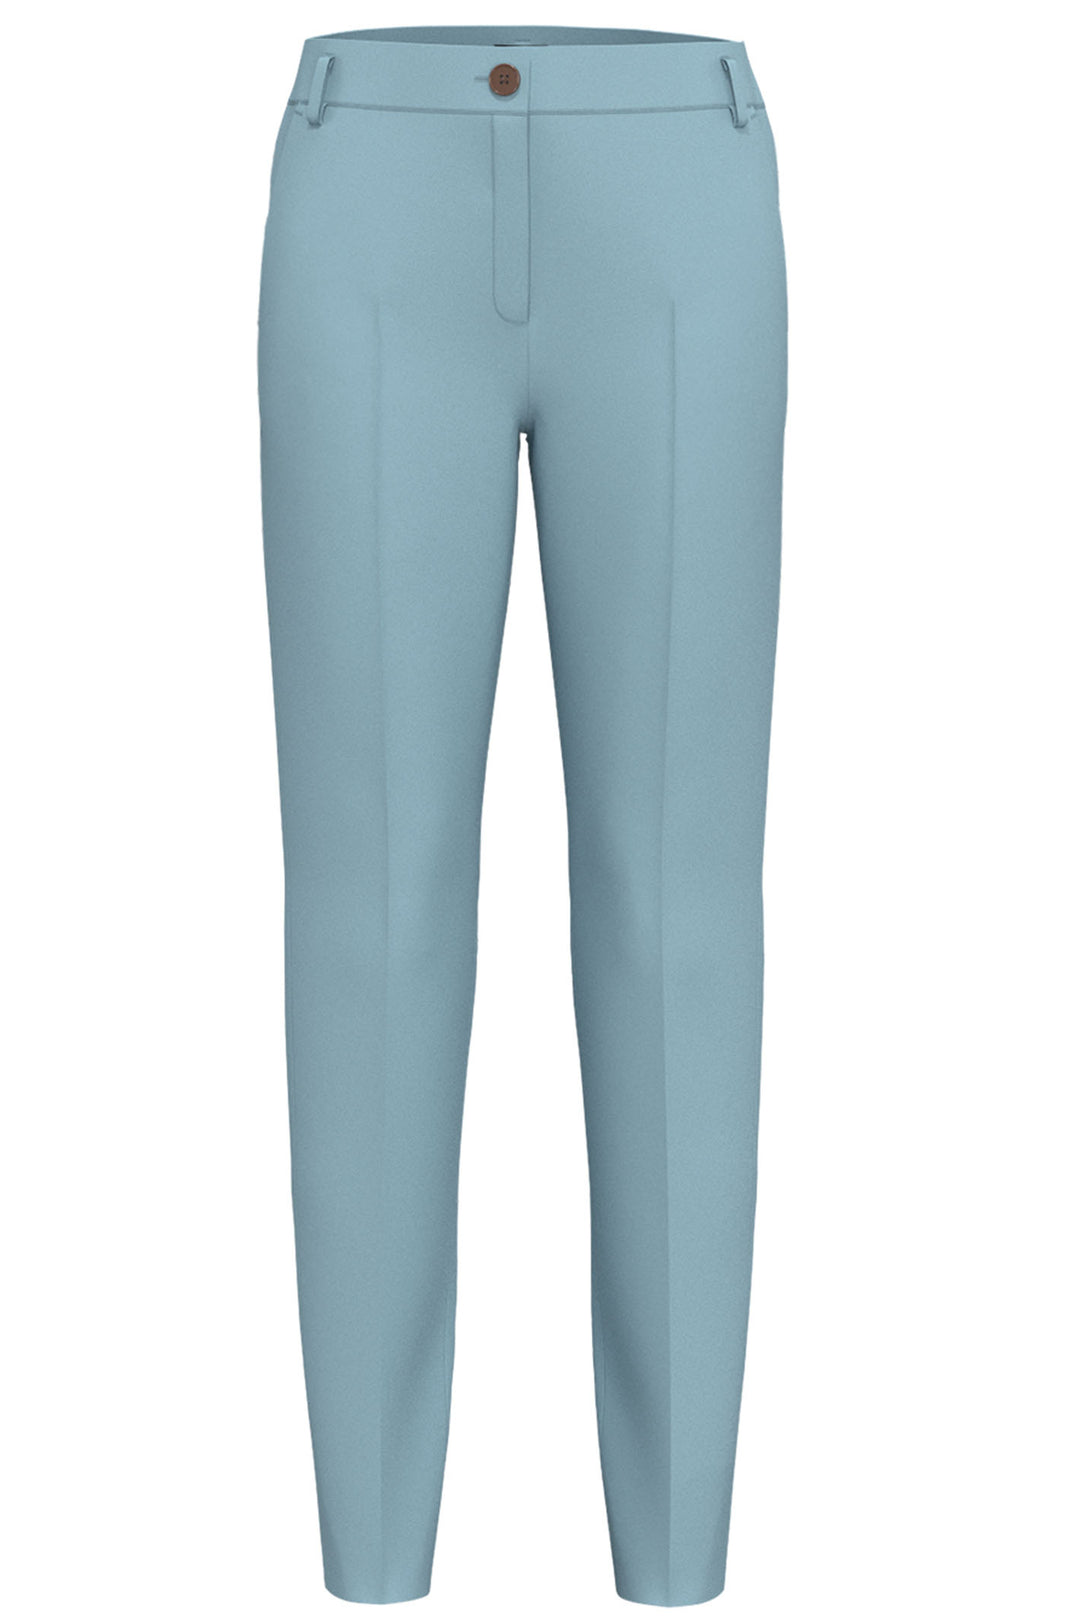 Emme Valenza 2415131071200 Light Blue Trousers - Olivia Grace Fashion